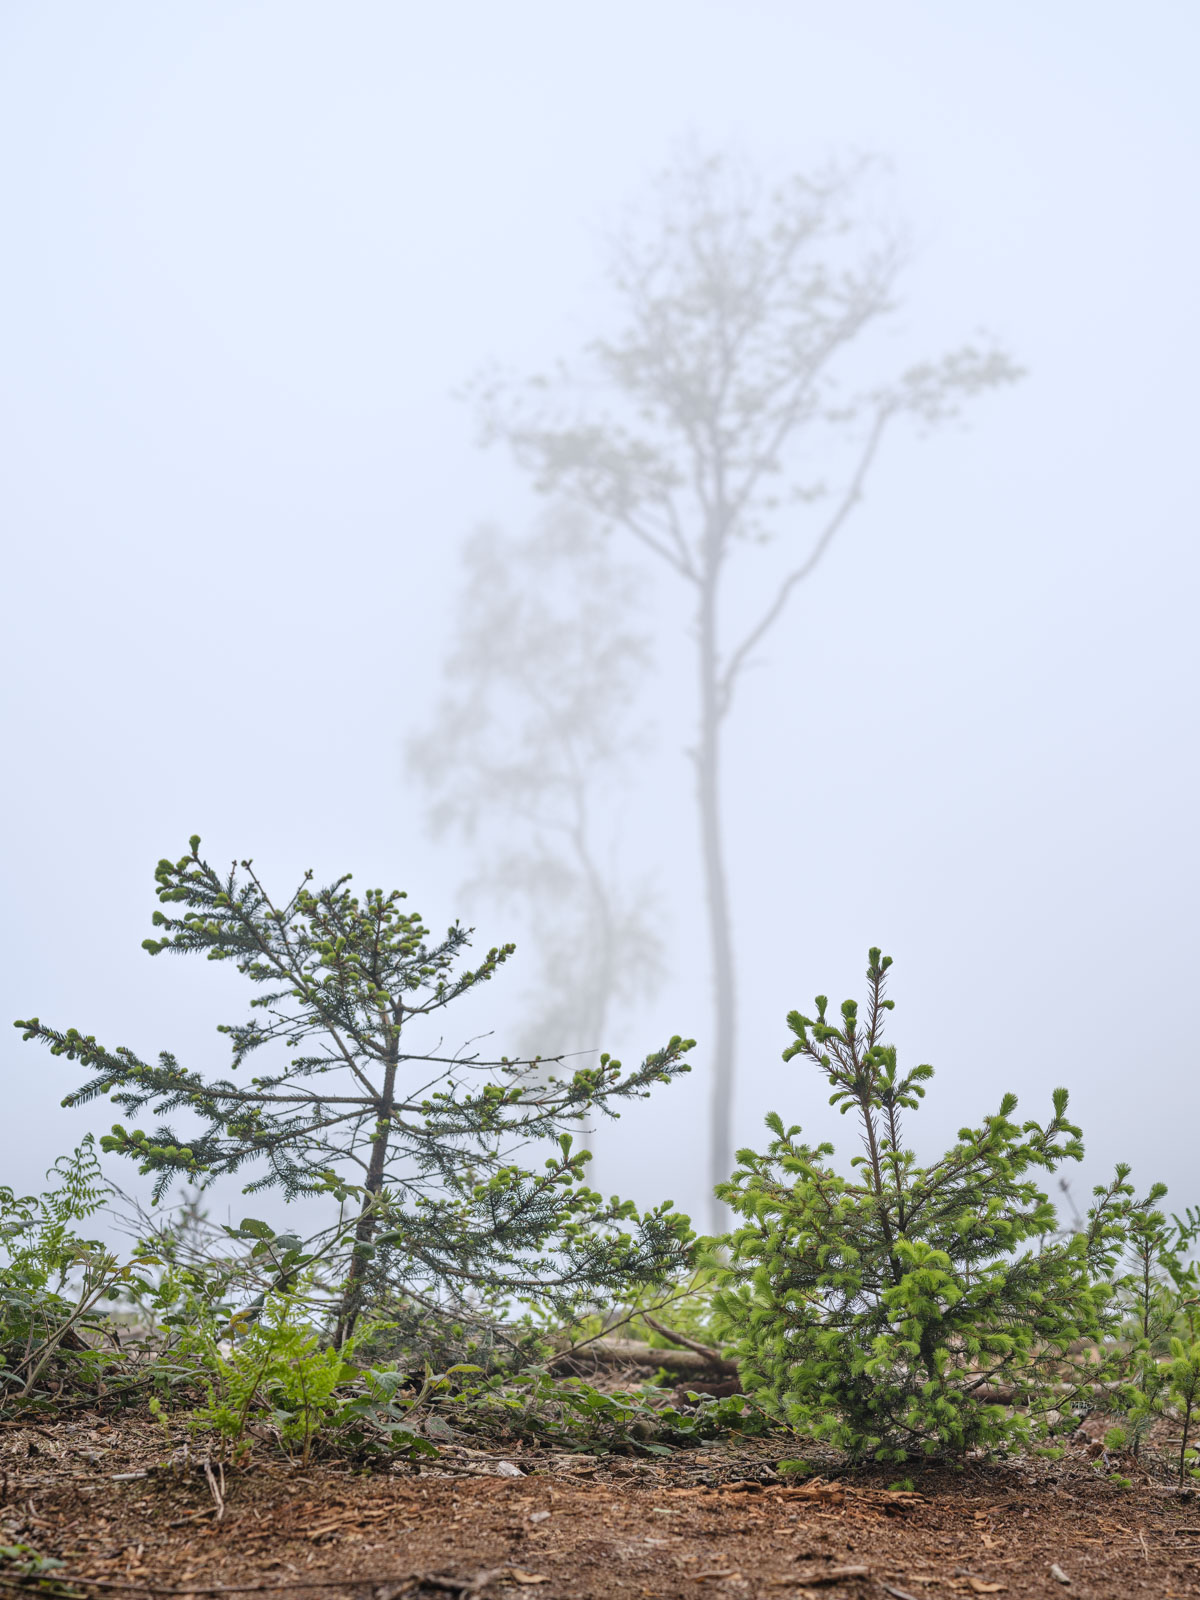 Trees in fog on the ridge of Teutoburg Forest (Bielefeld, Germany).